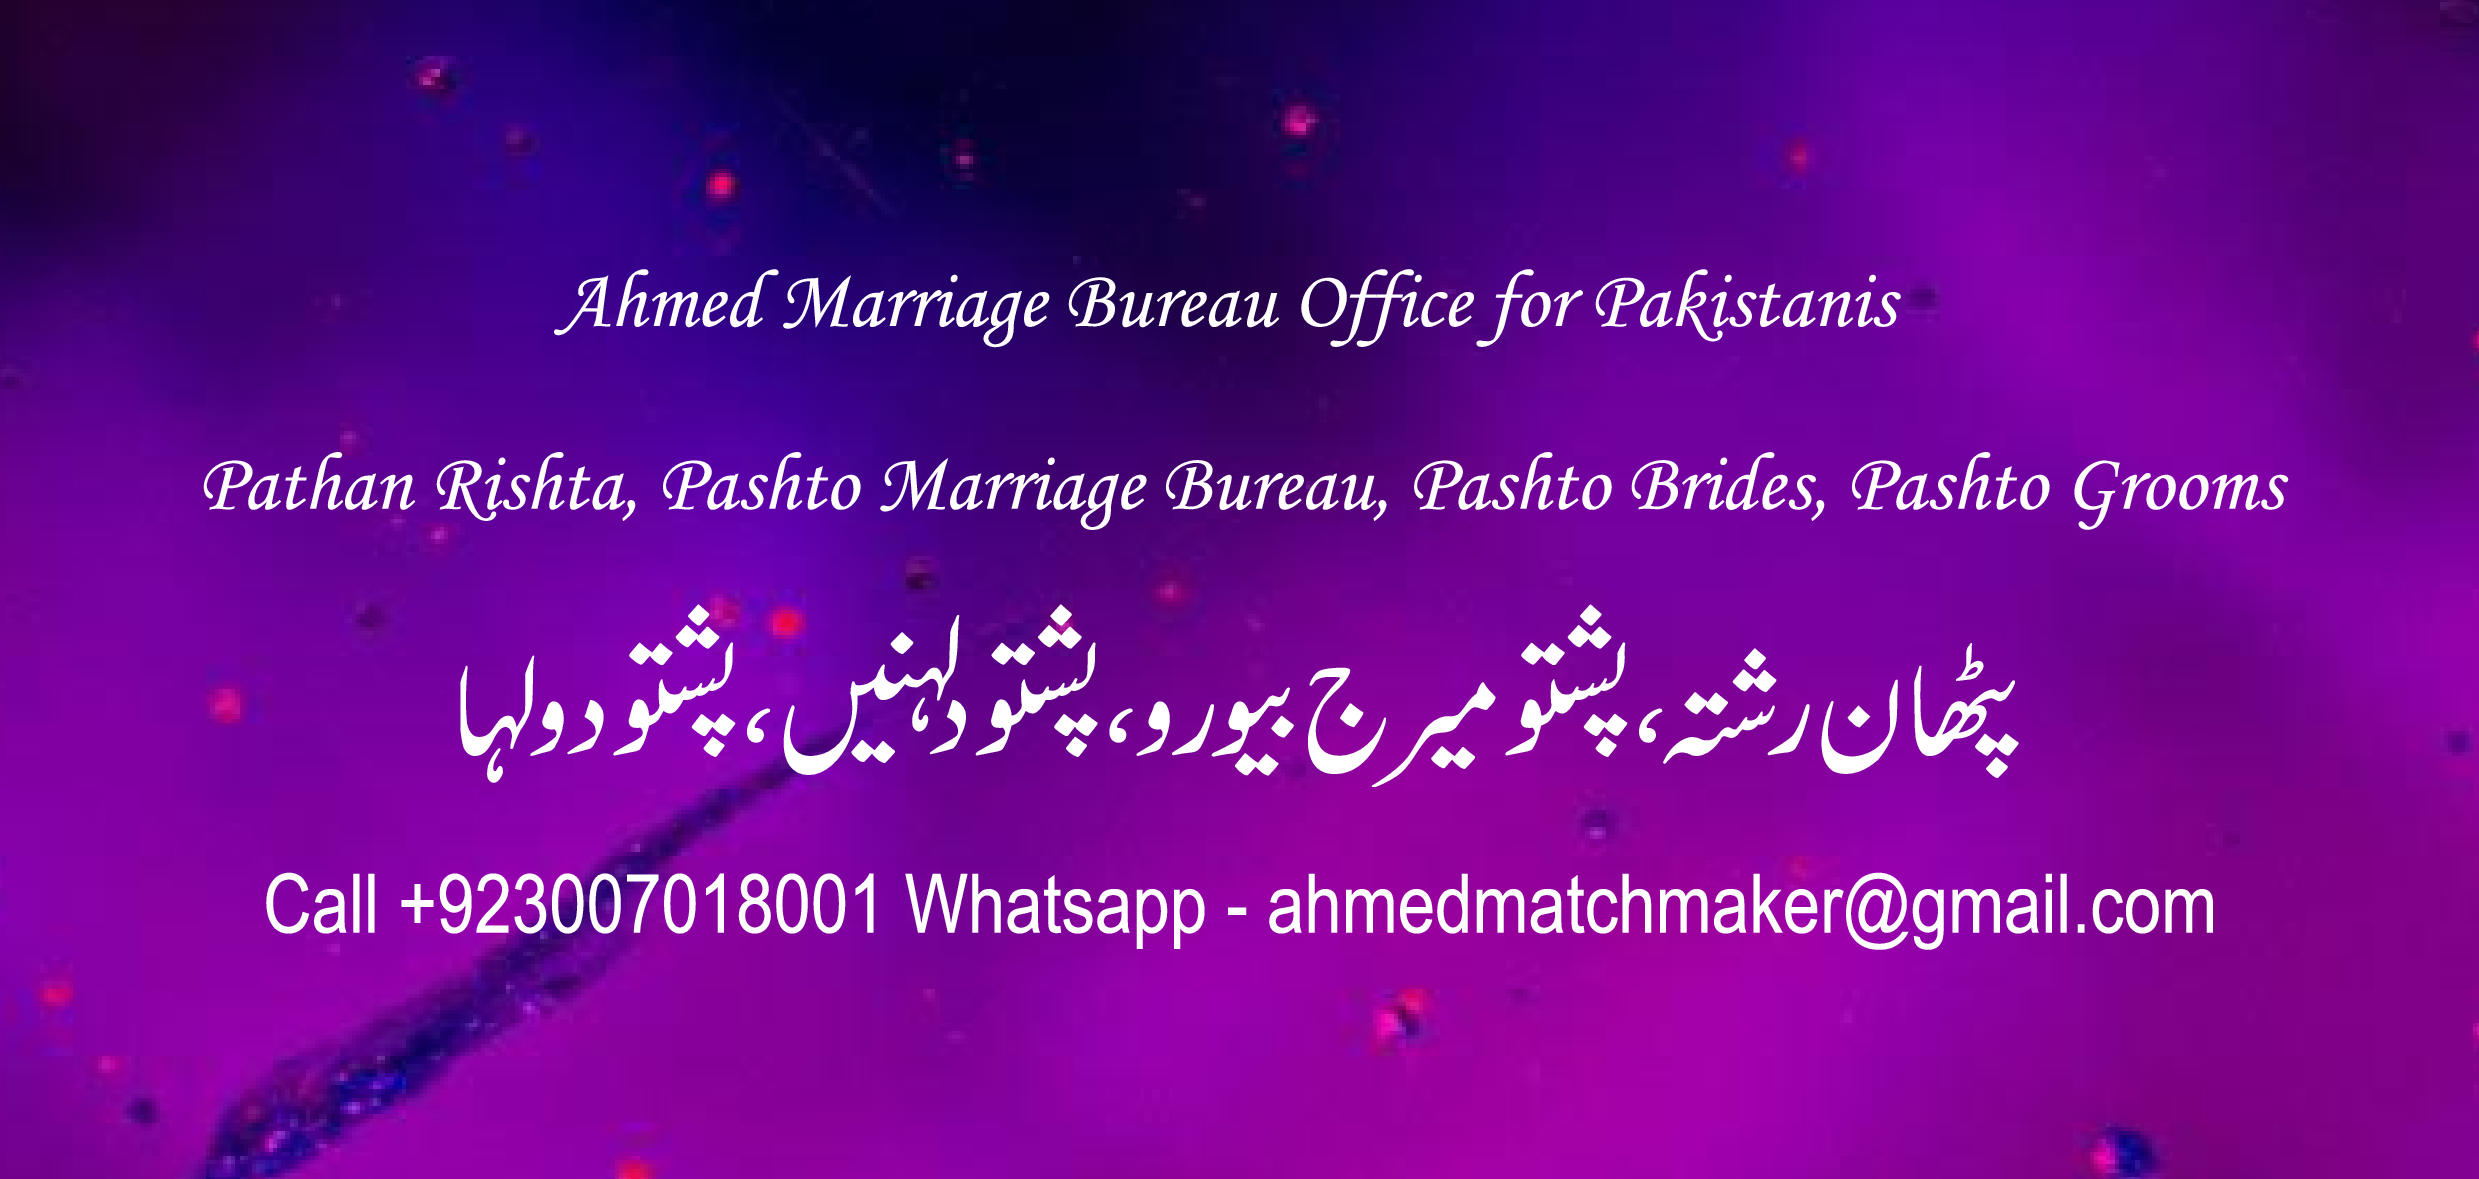 Pakistan-marriage-bureau-shaadi-matrimonial-America-Canada-Australia-Dubai-Europe-30.png